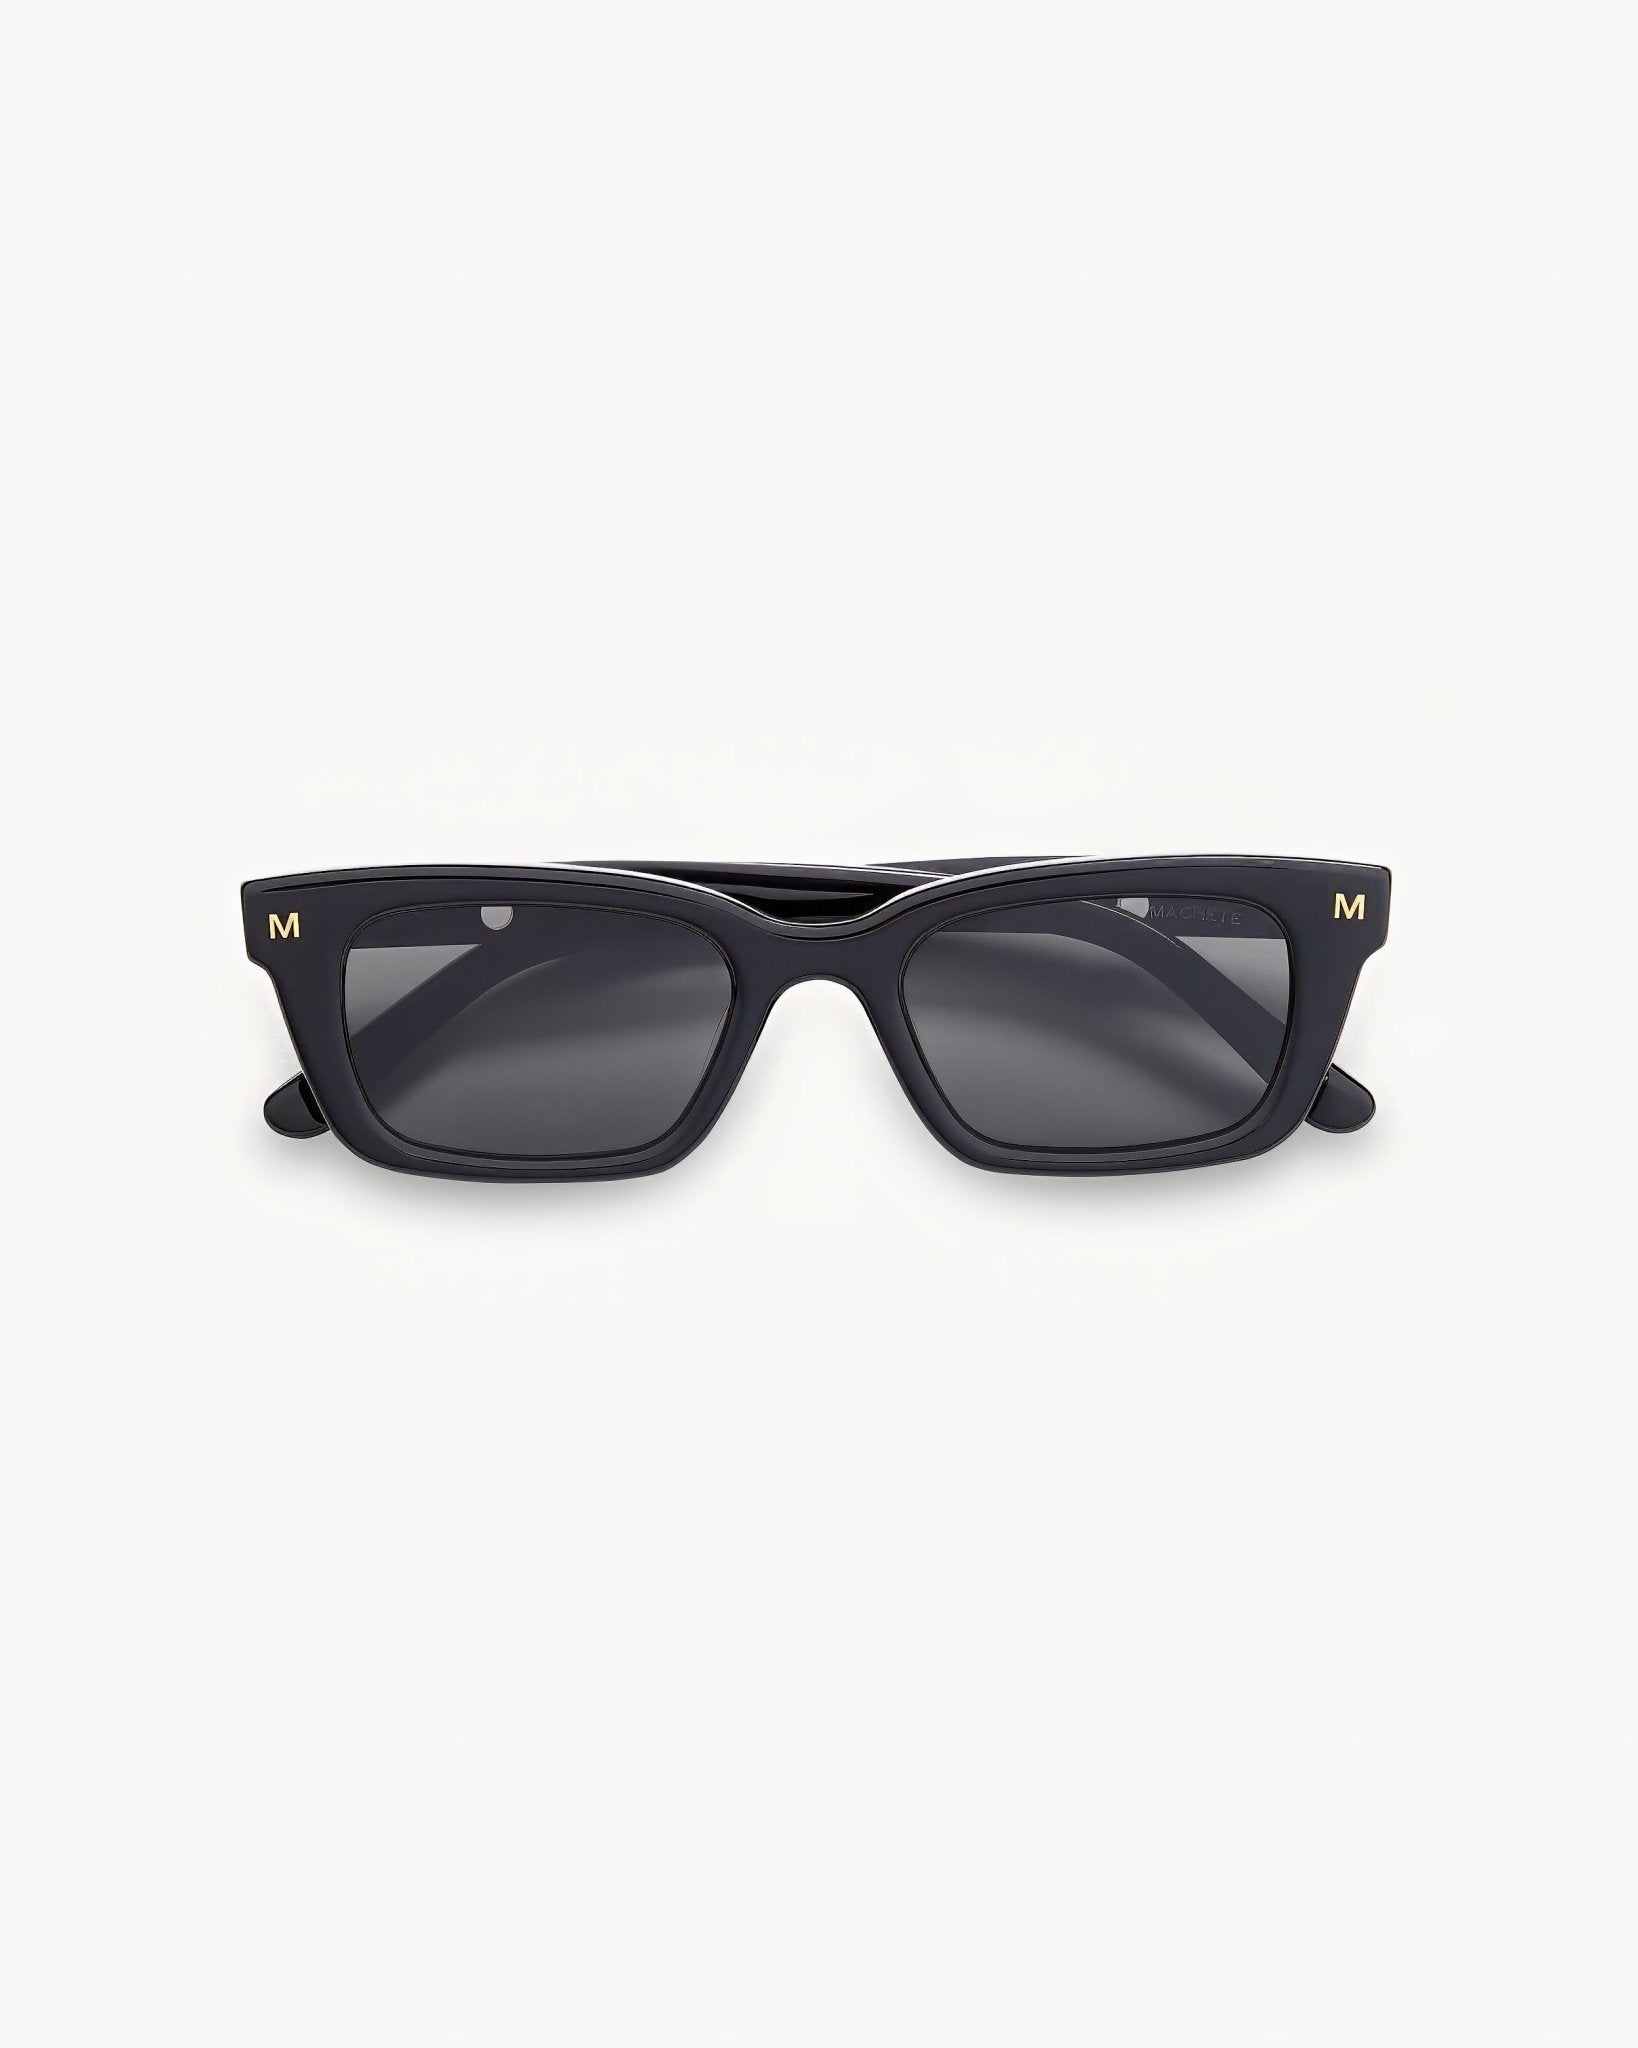 MACHETE Ruby Sunglasses in Black